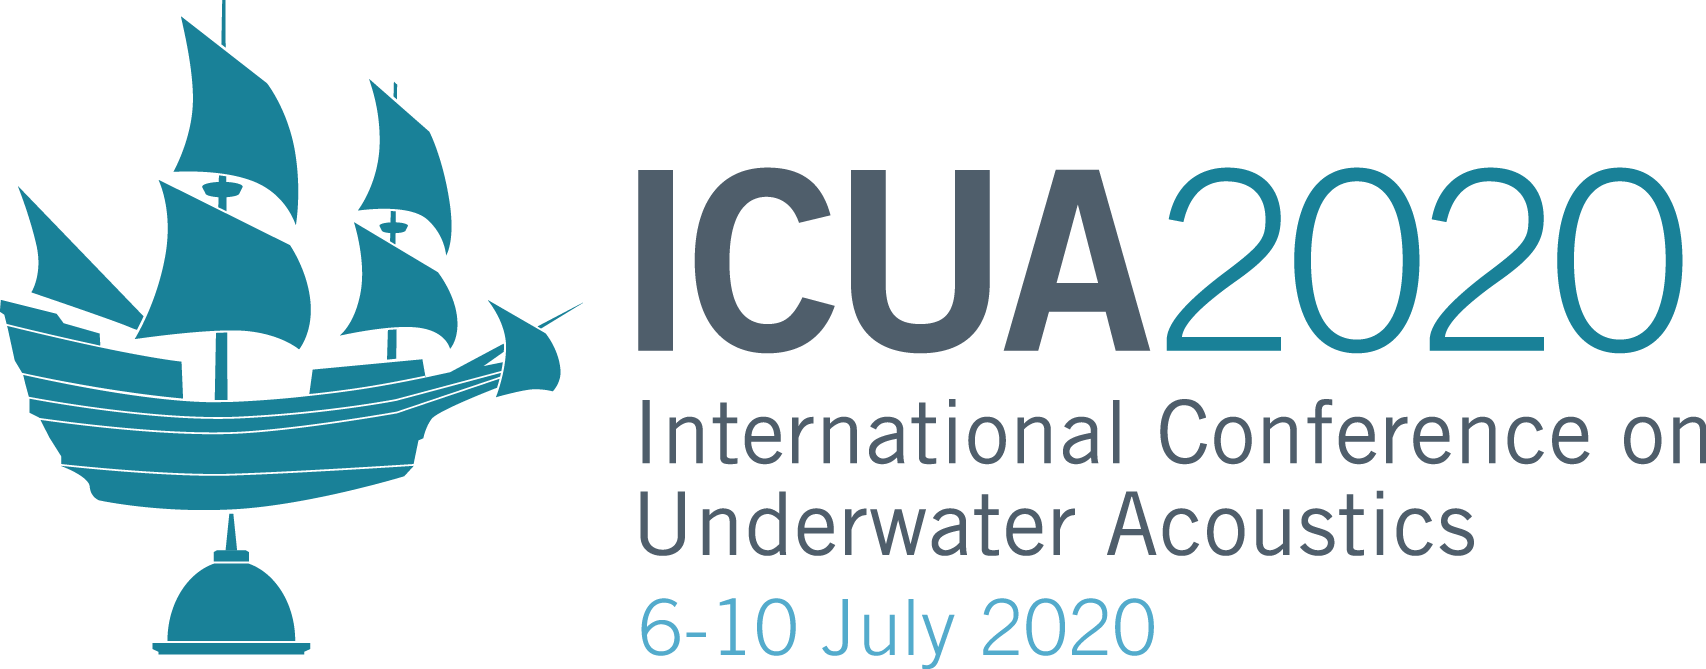 ICUA 2020 logo